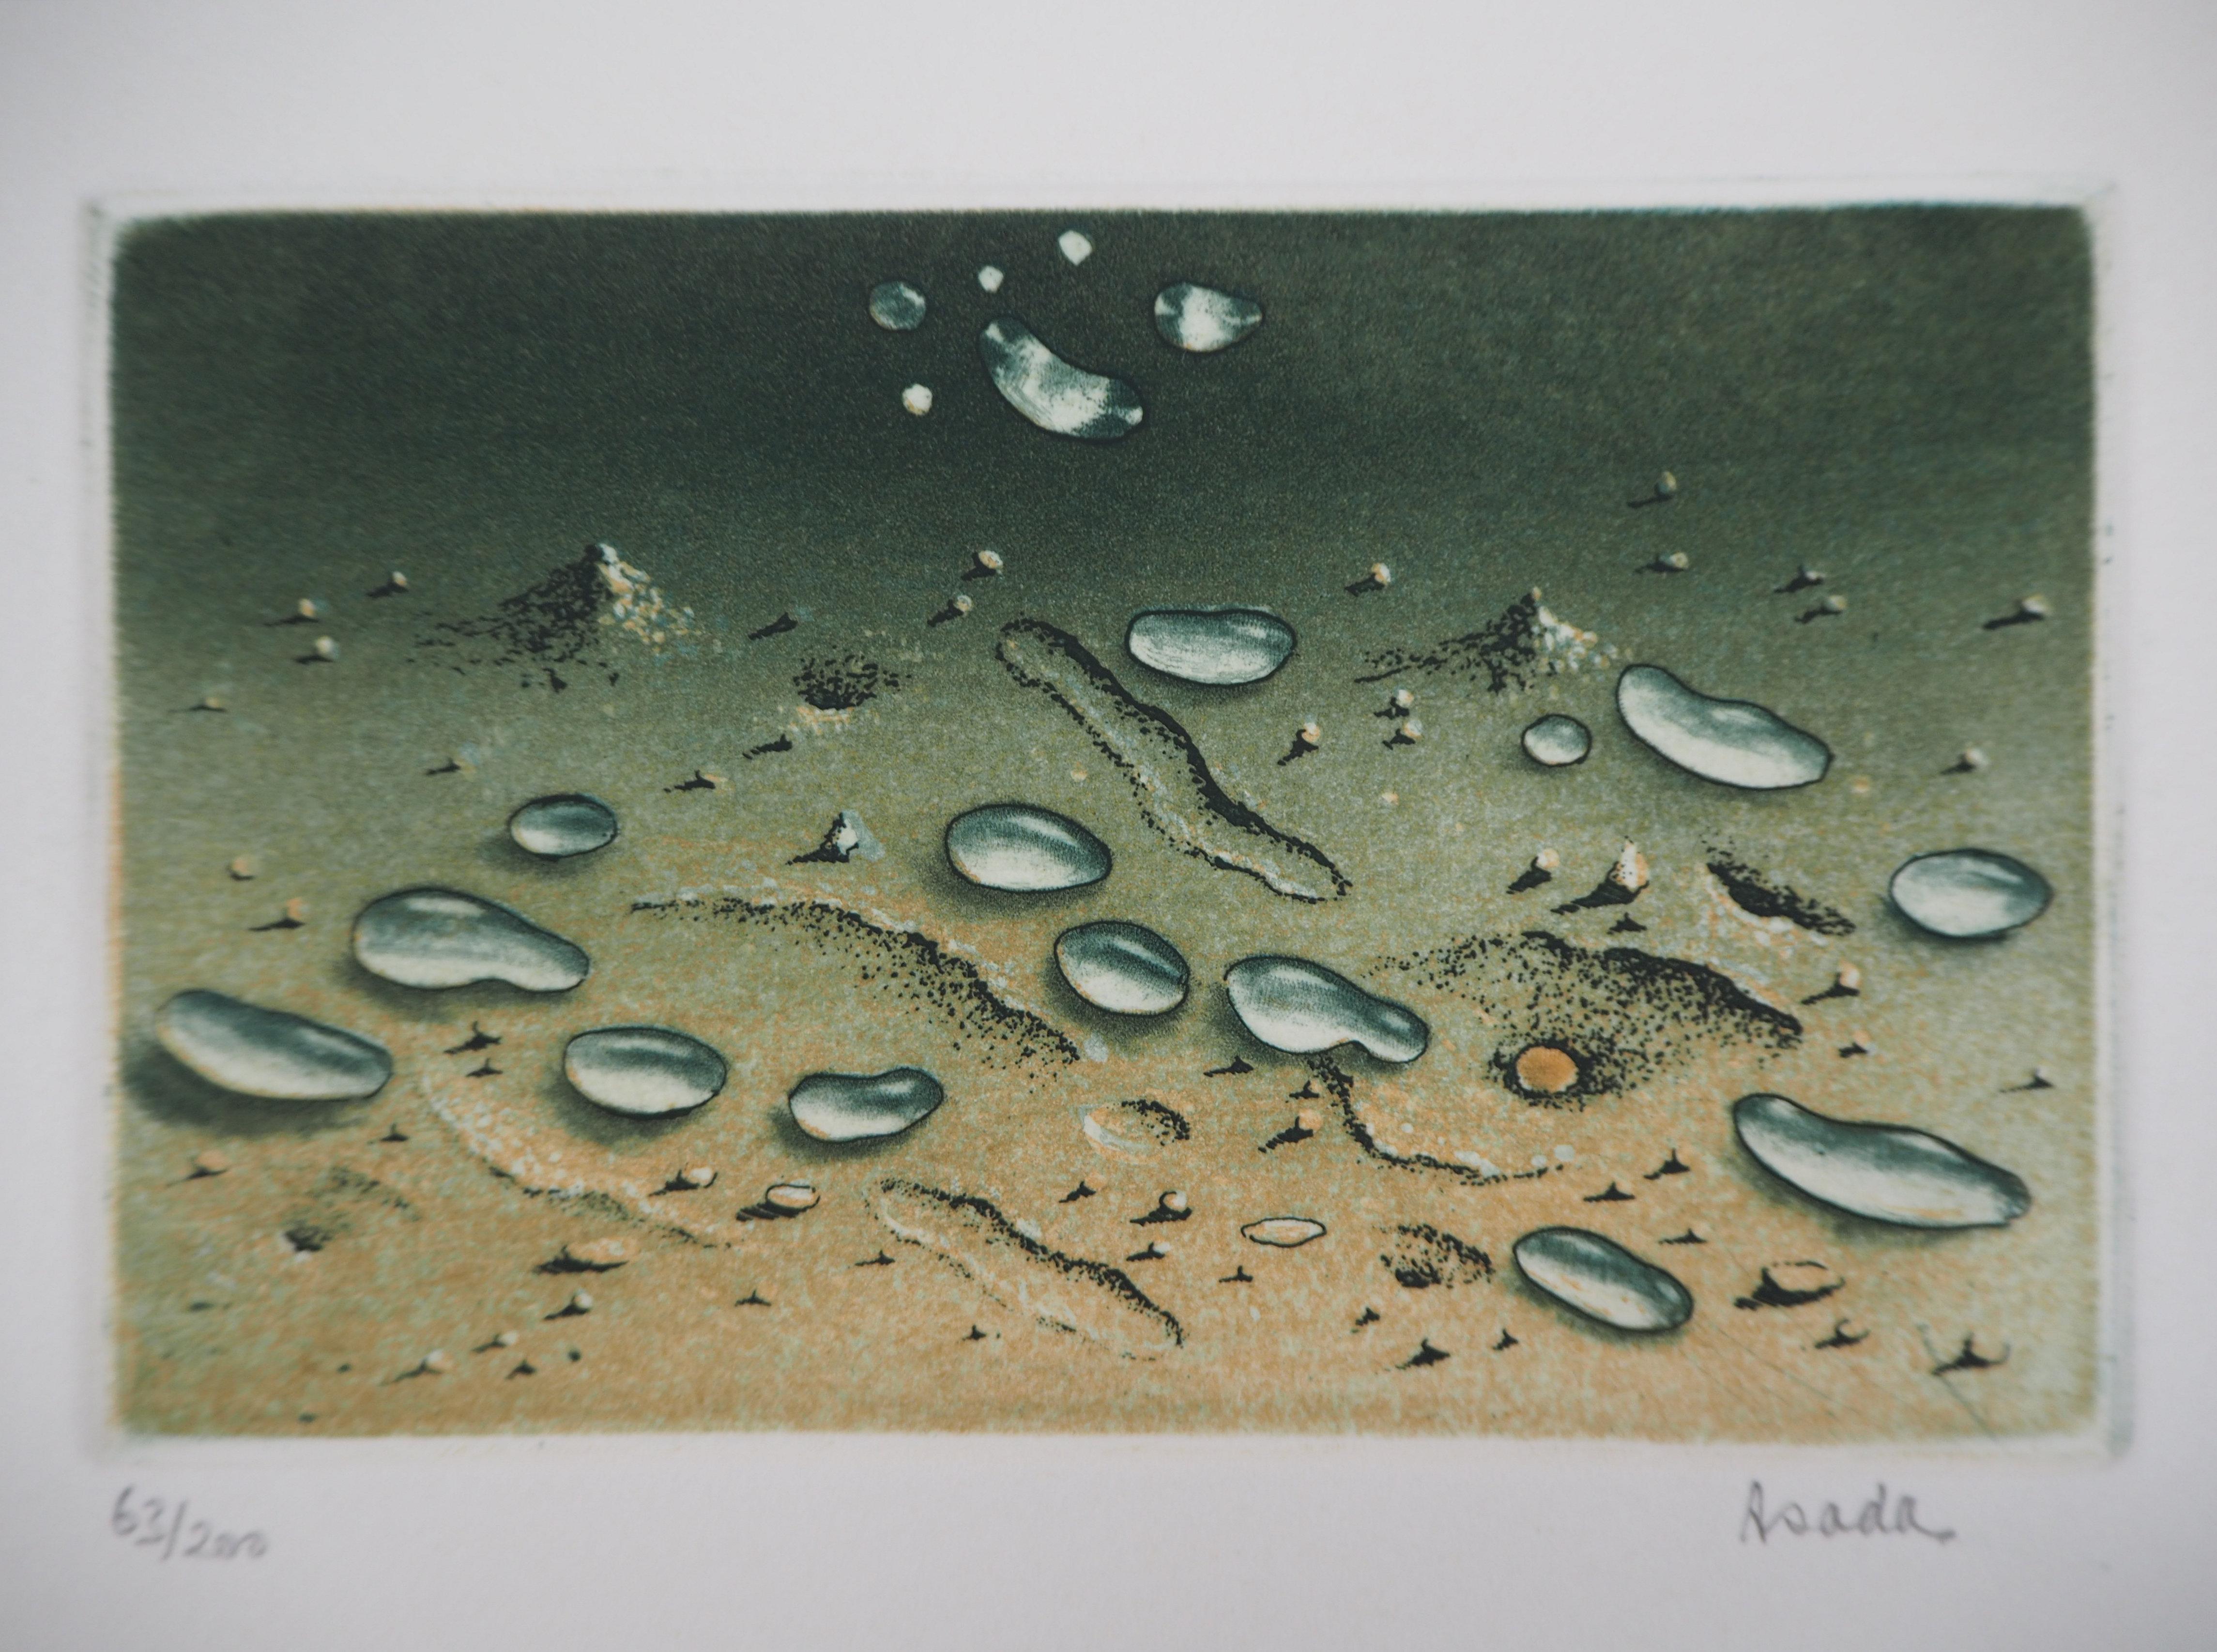 Hiroshi Asada Figurative Print - Zen : Water Drops on the Sand - Original handsigned etching - Numbered / 200